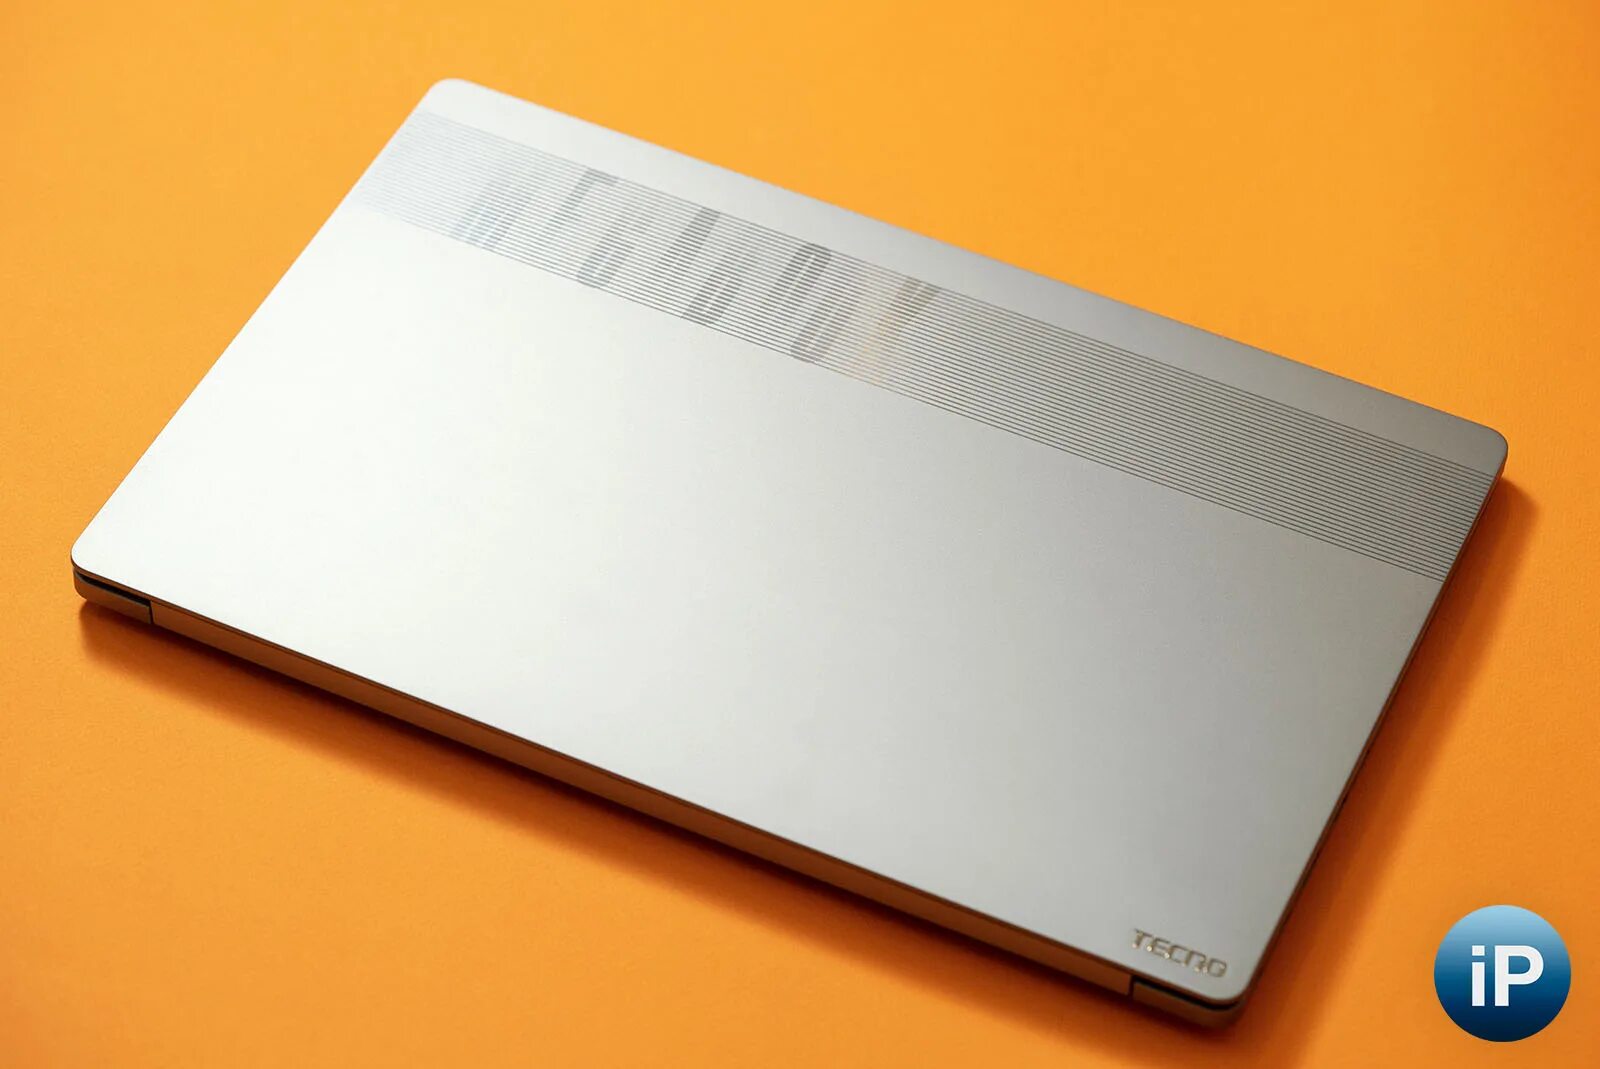 Ноутбук MEGABOOK. Techno ноутбук MEGABOOK цвета. Матрица ноутбука Techno MEGABOOK t1. Ноутбук Tecno MEGABOOK t1 синий. Tecno megabook t1 16gb